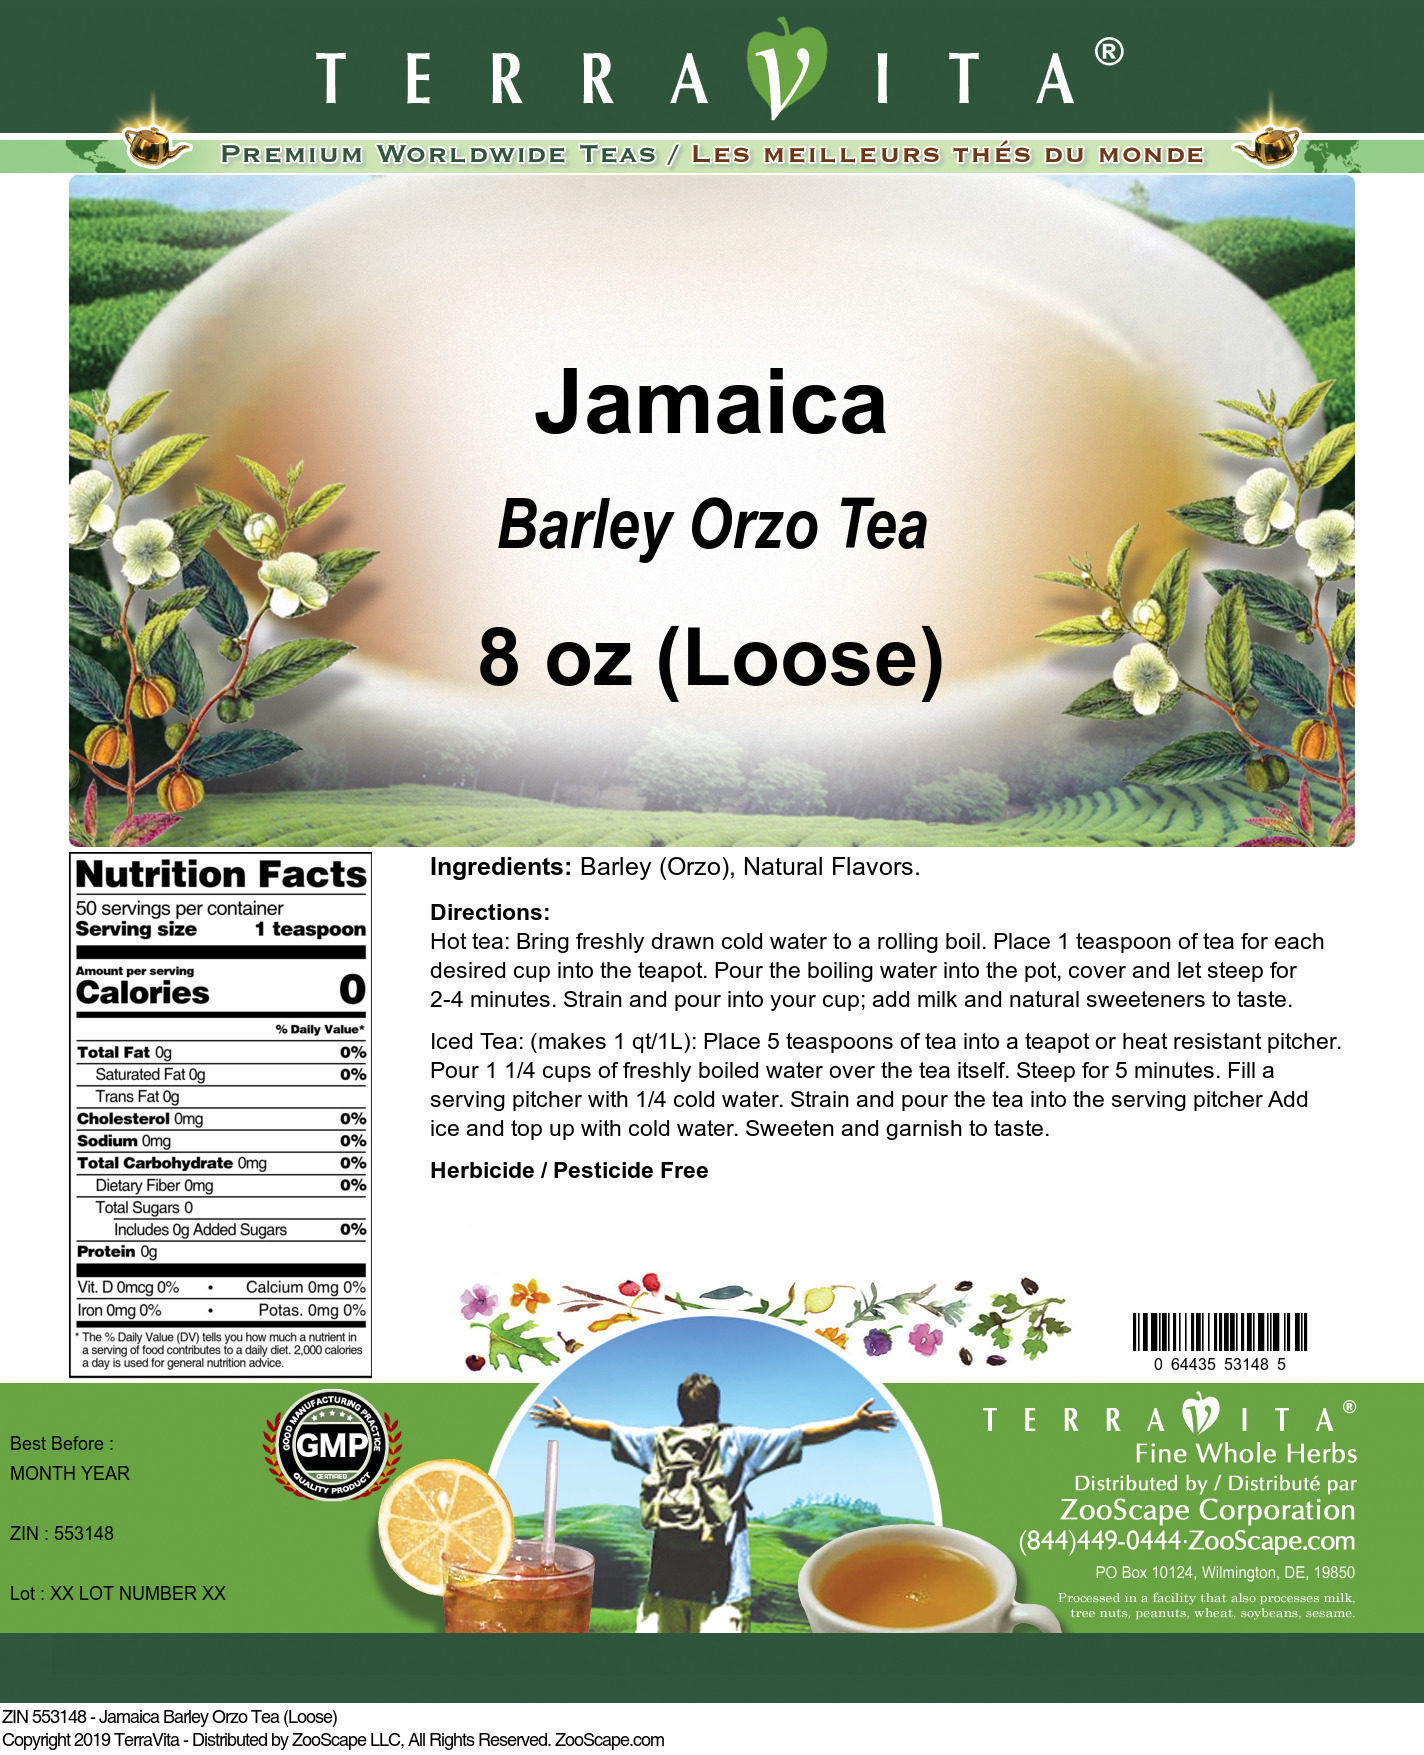 Jamaica Barley Orzo Tea (Loose) - Label